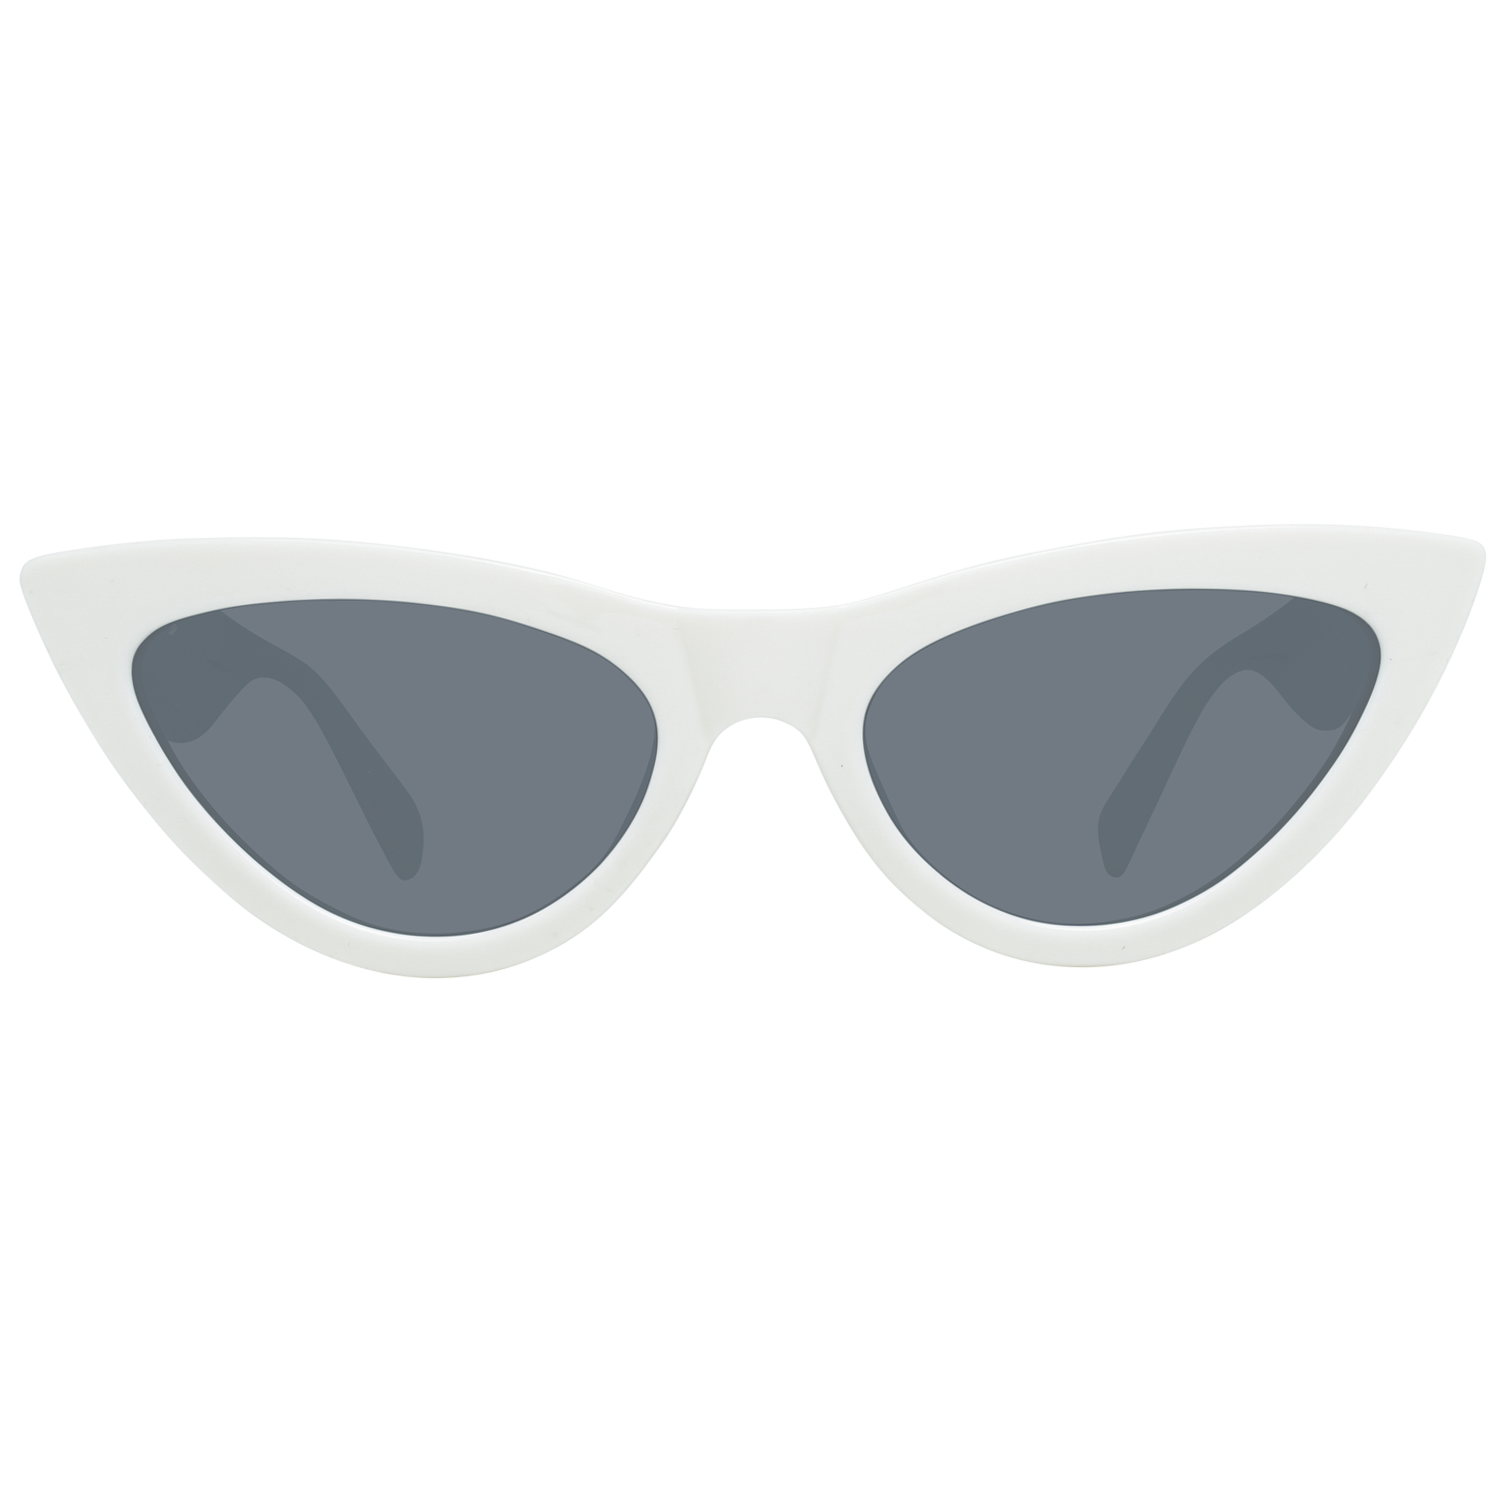 Millner Sunglasses Millner Sunglasses 0020802 Portobello Eyeglasses Eyewear UK USA Australia 